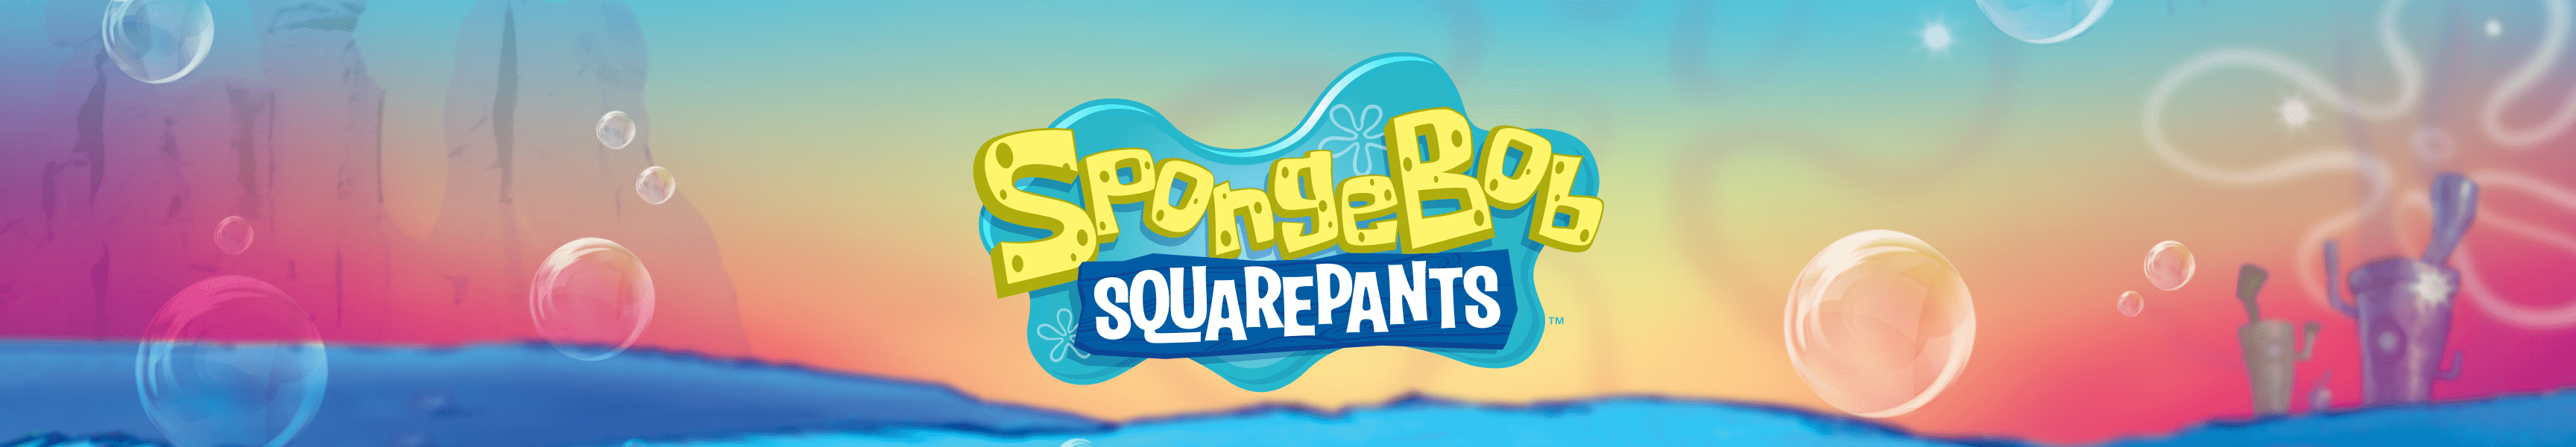 SpongeBob SquarePants Holiday